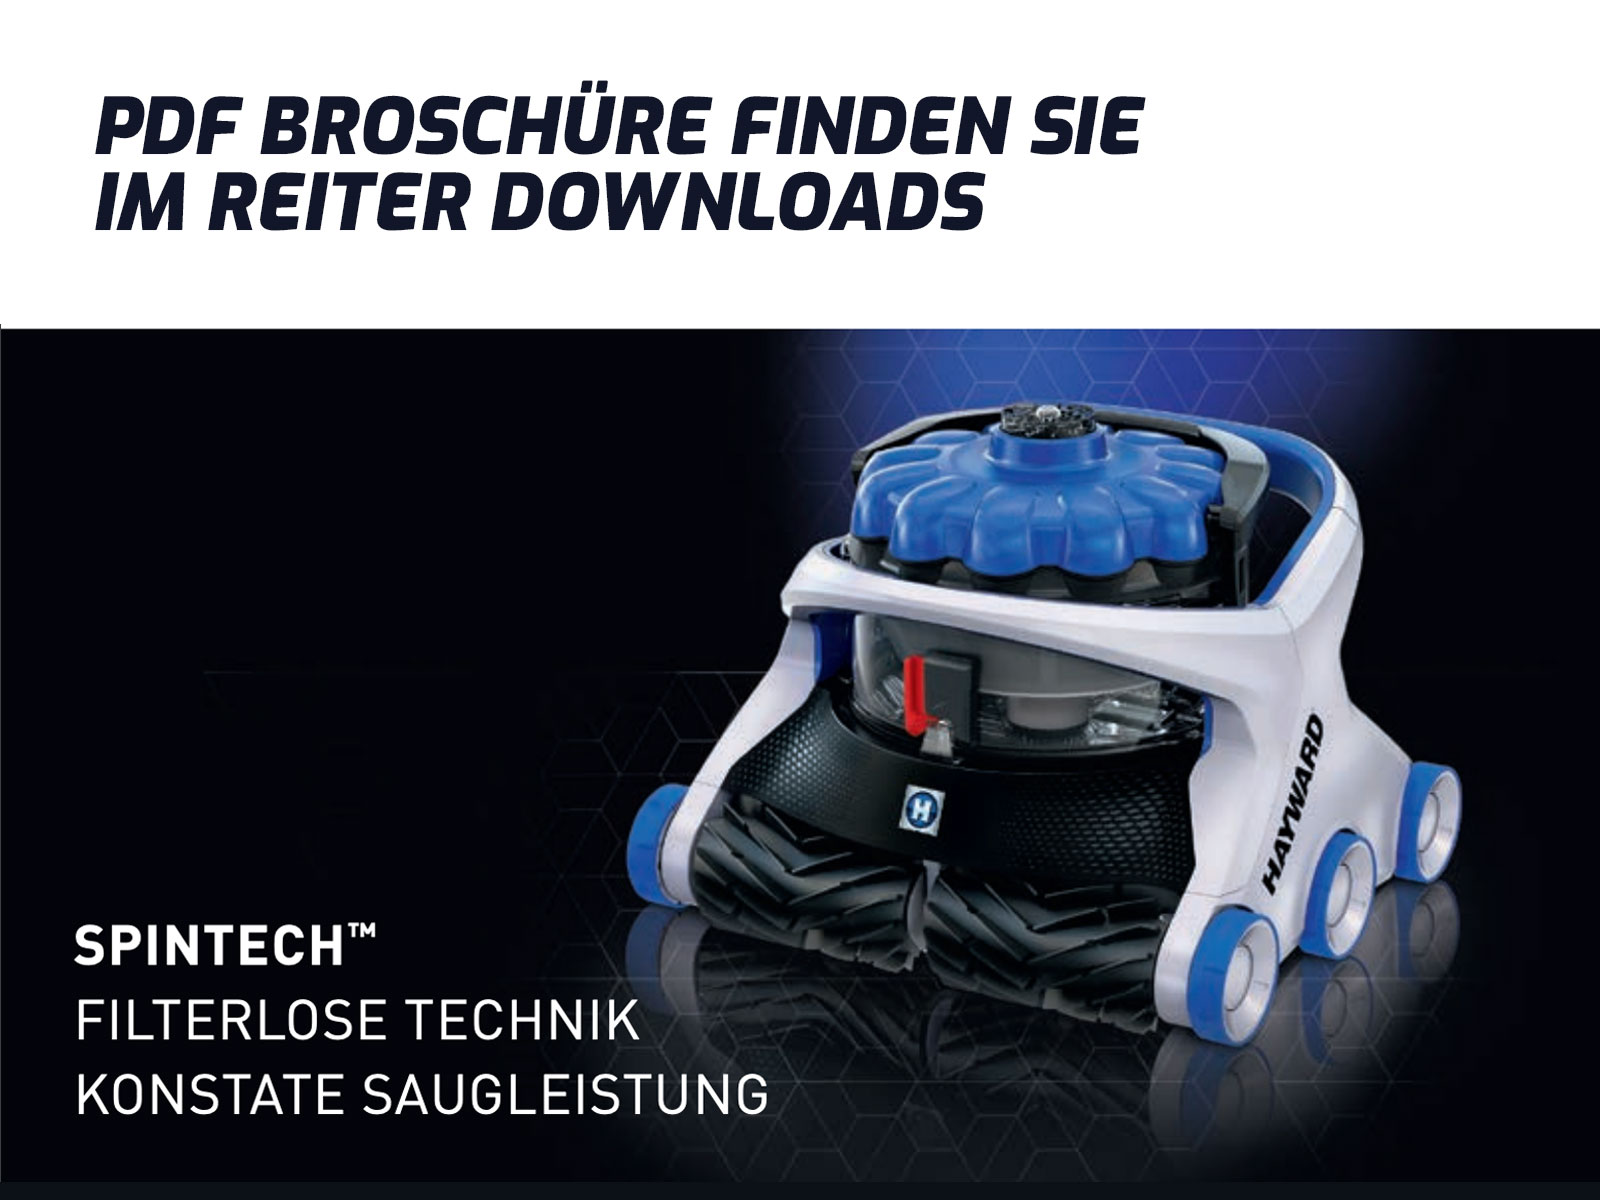 PDF BROSCHÜRE - Hayward Reinigungsroboter Aquavac 650